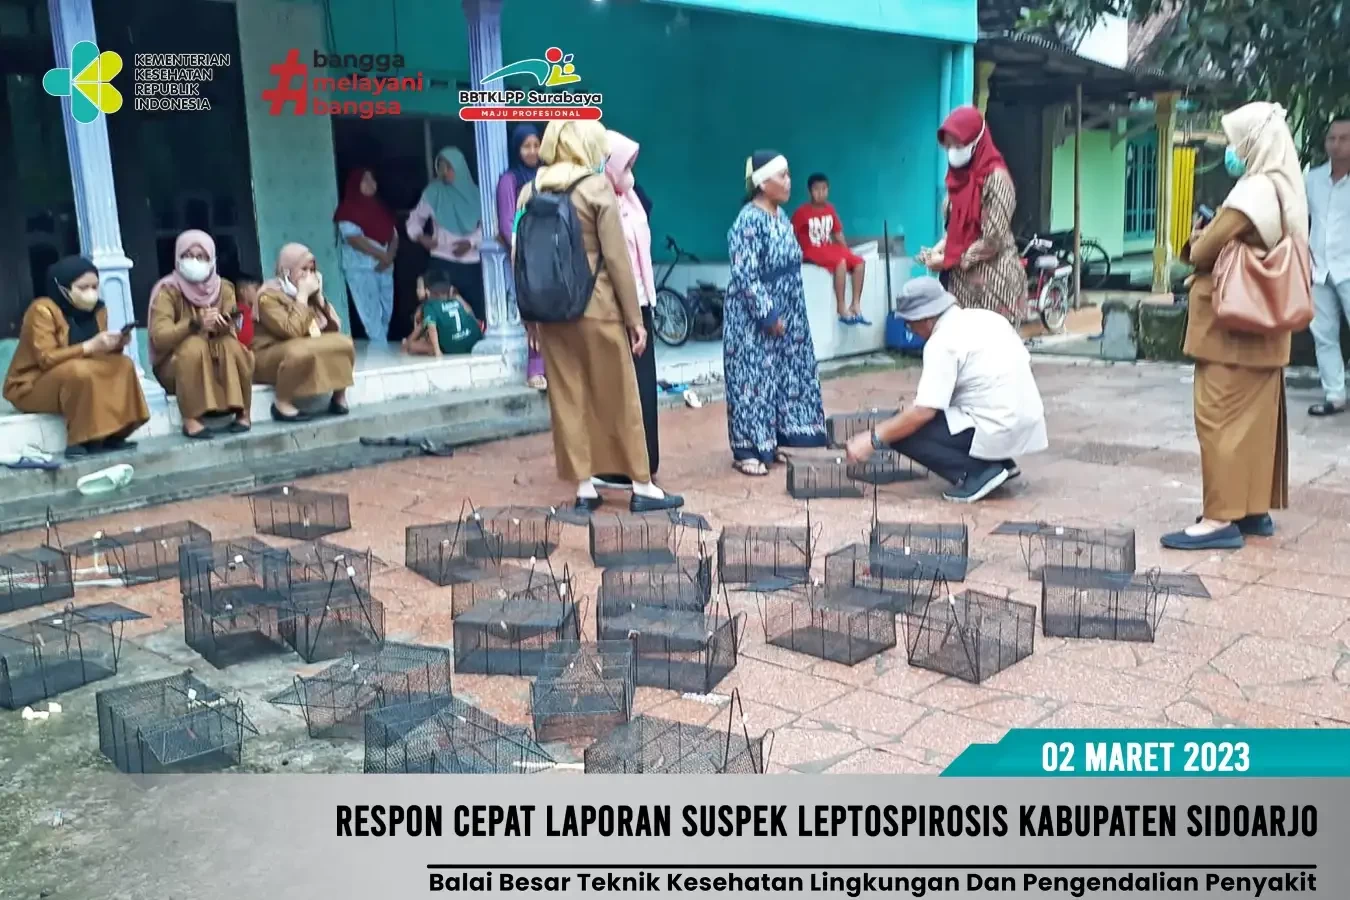 Penyelidikan juga dilakukanTim BBTKLPP bersama Dinas Kesehatan Provinsi Jawa Timur dan Dinas Kesehatan Kabupaten melakukan penyelidikan pada 27 – 28 Februari 2023.(Foto: dok. Btklsby)